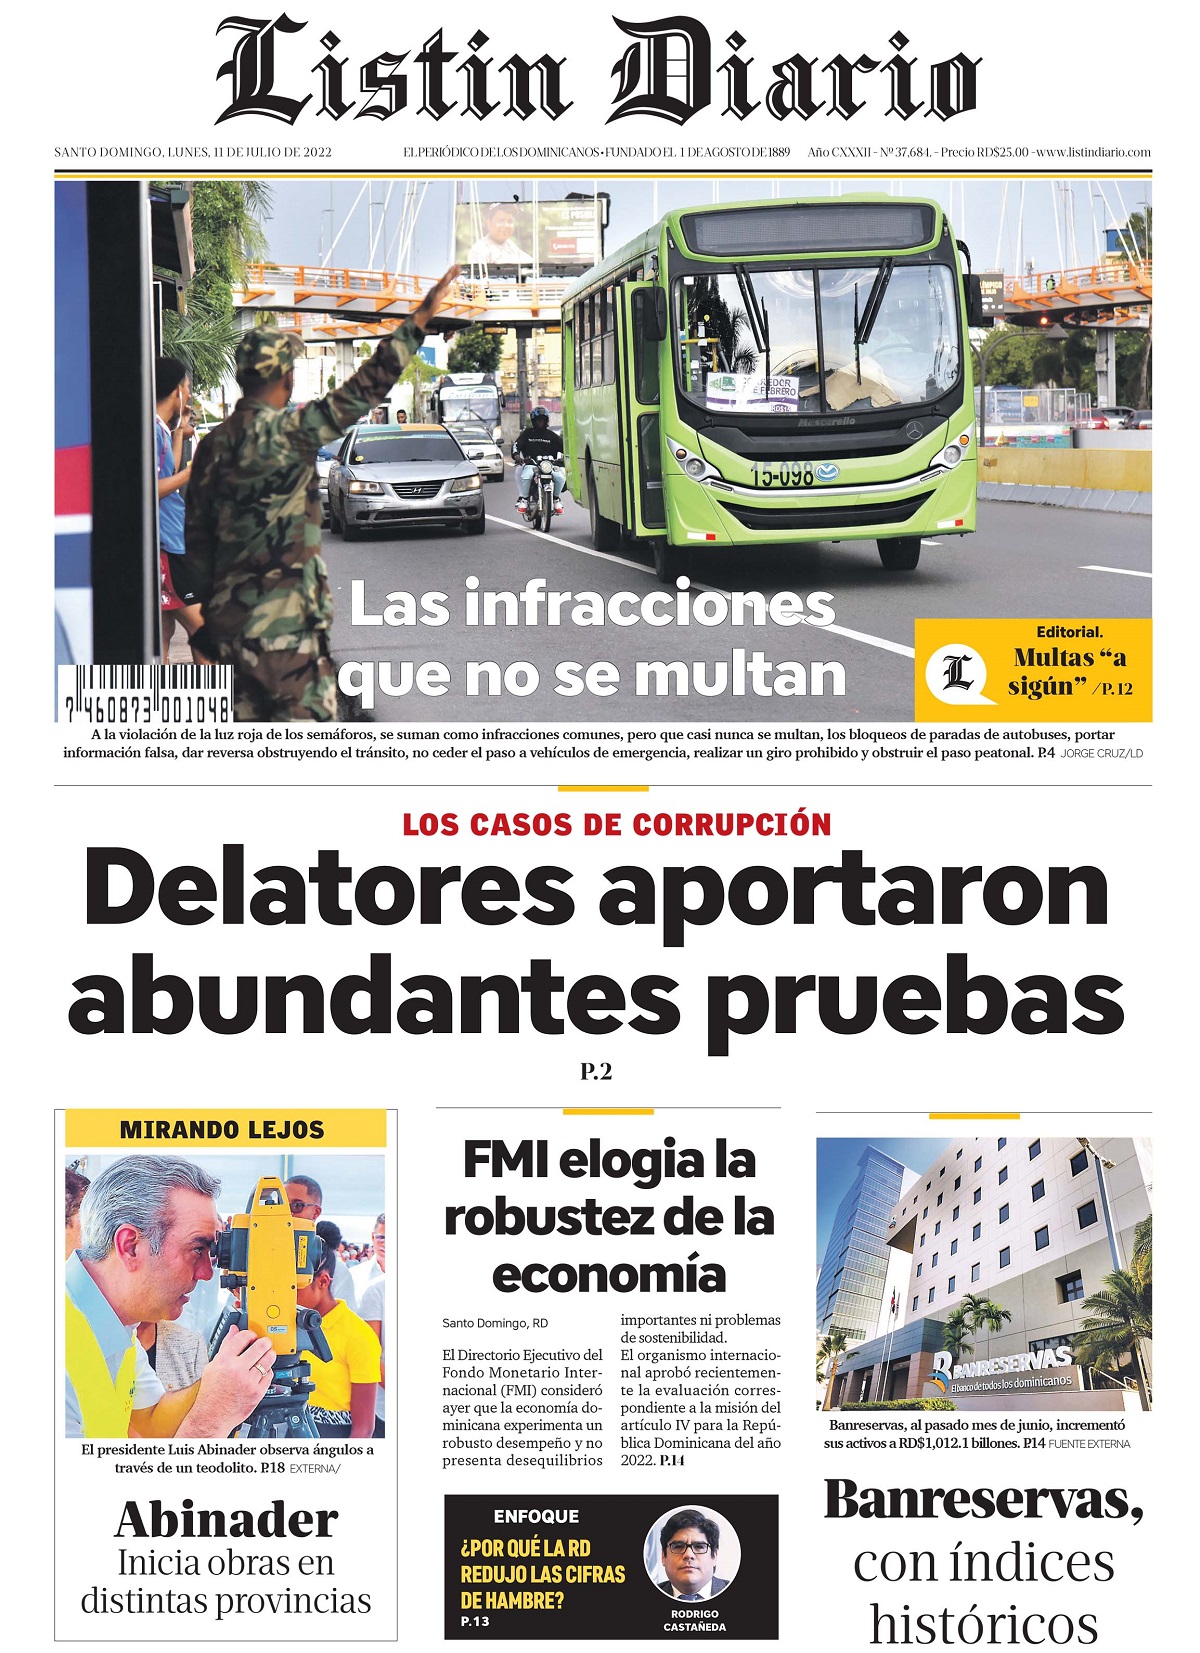 Portada Periódico Listín Diario, Lunes 11 Julio, 2022